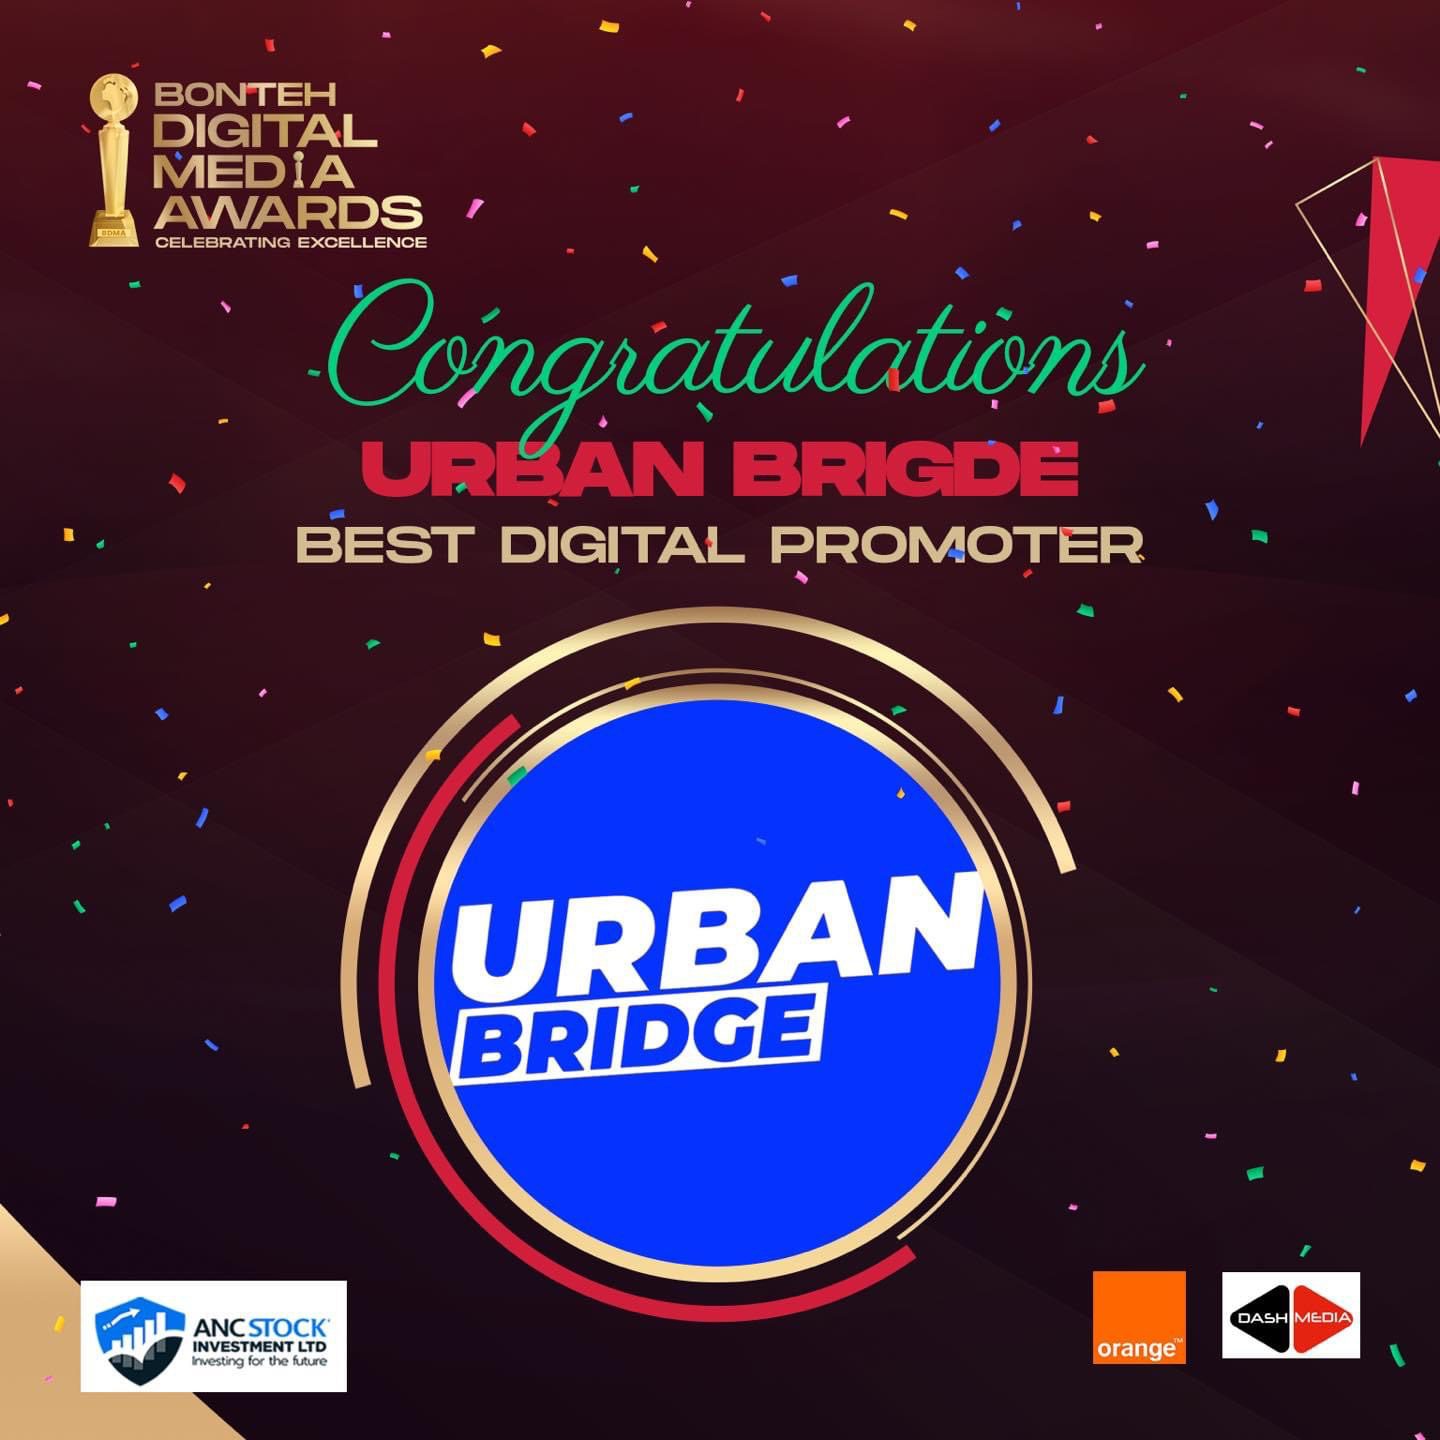 Best Digital Promoter: UrbanBridge